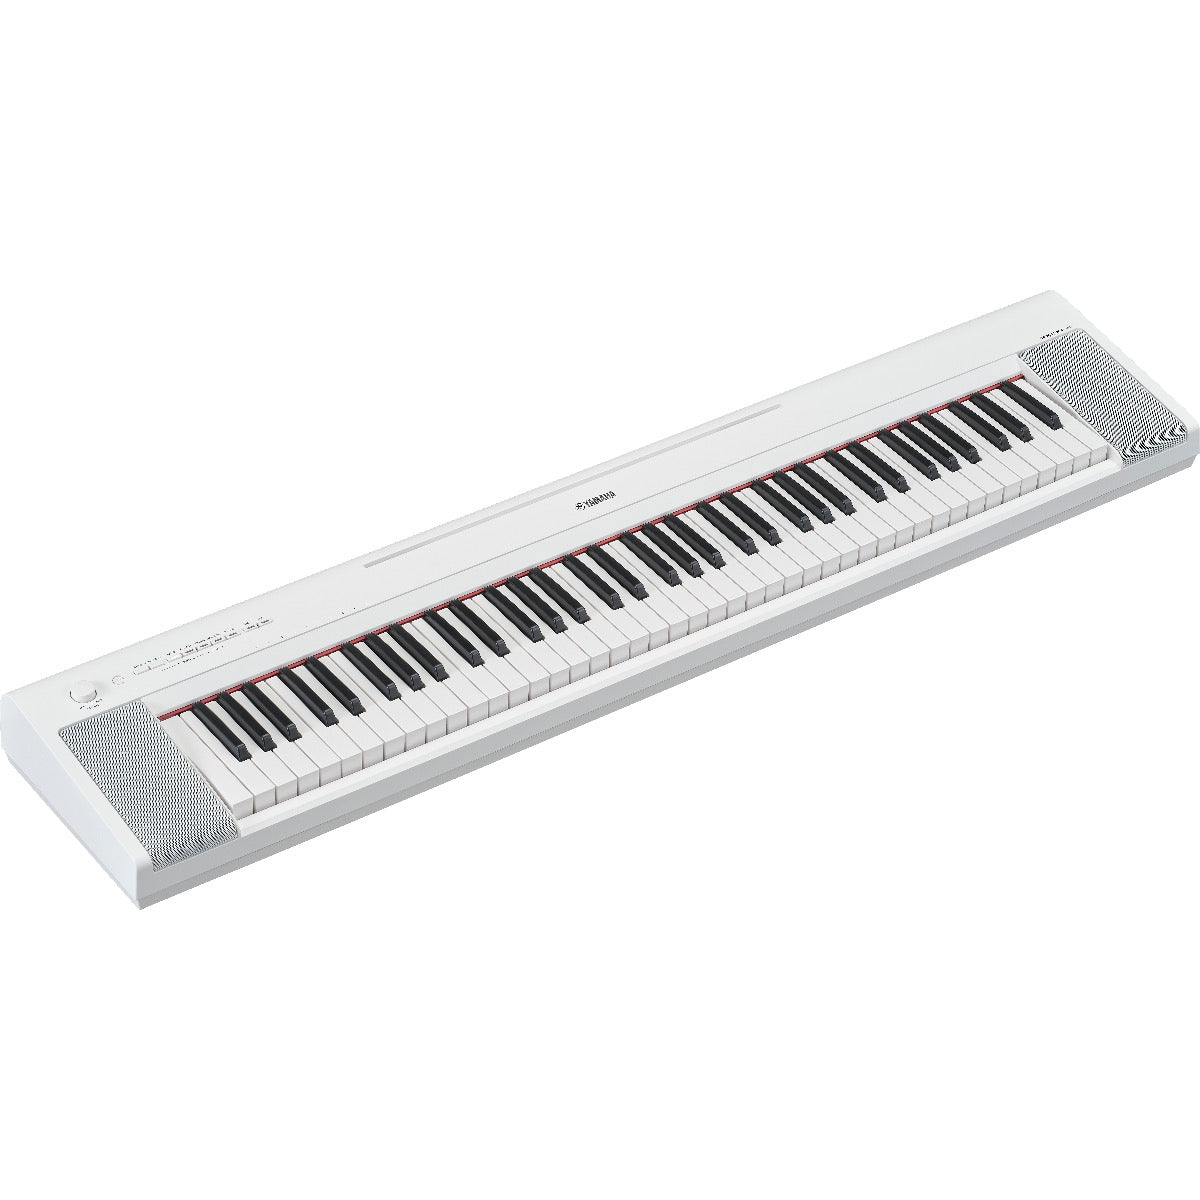 Yamaha Piaggero NP35 76-Key Portable Keyboard with Power Adapter - White, View 1